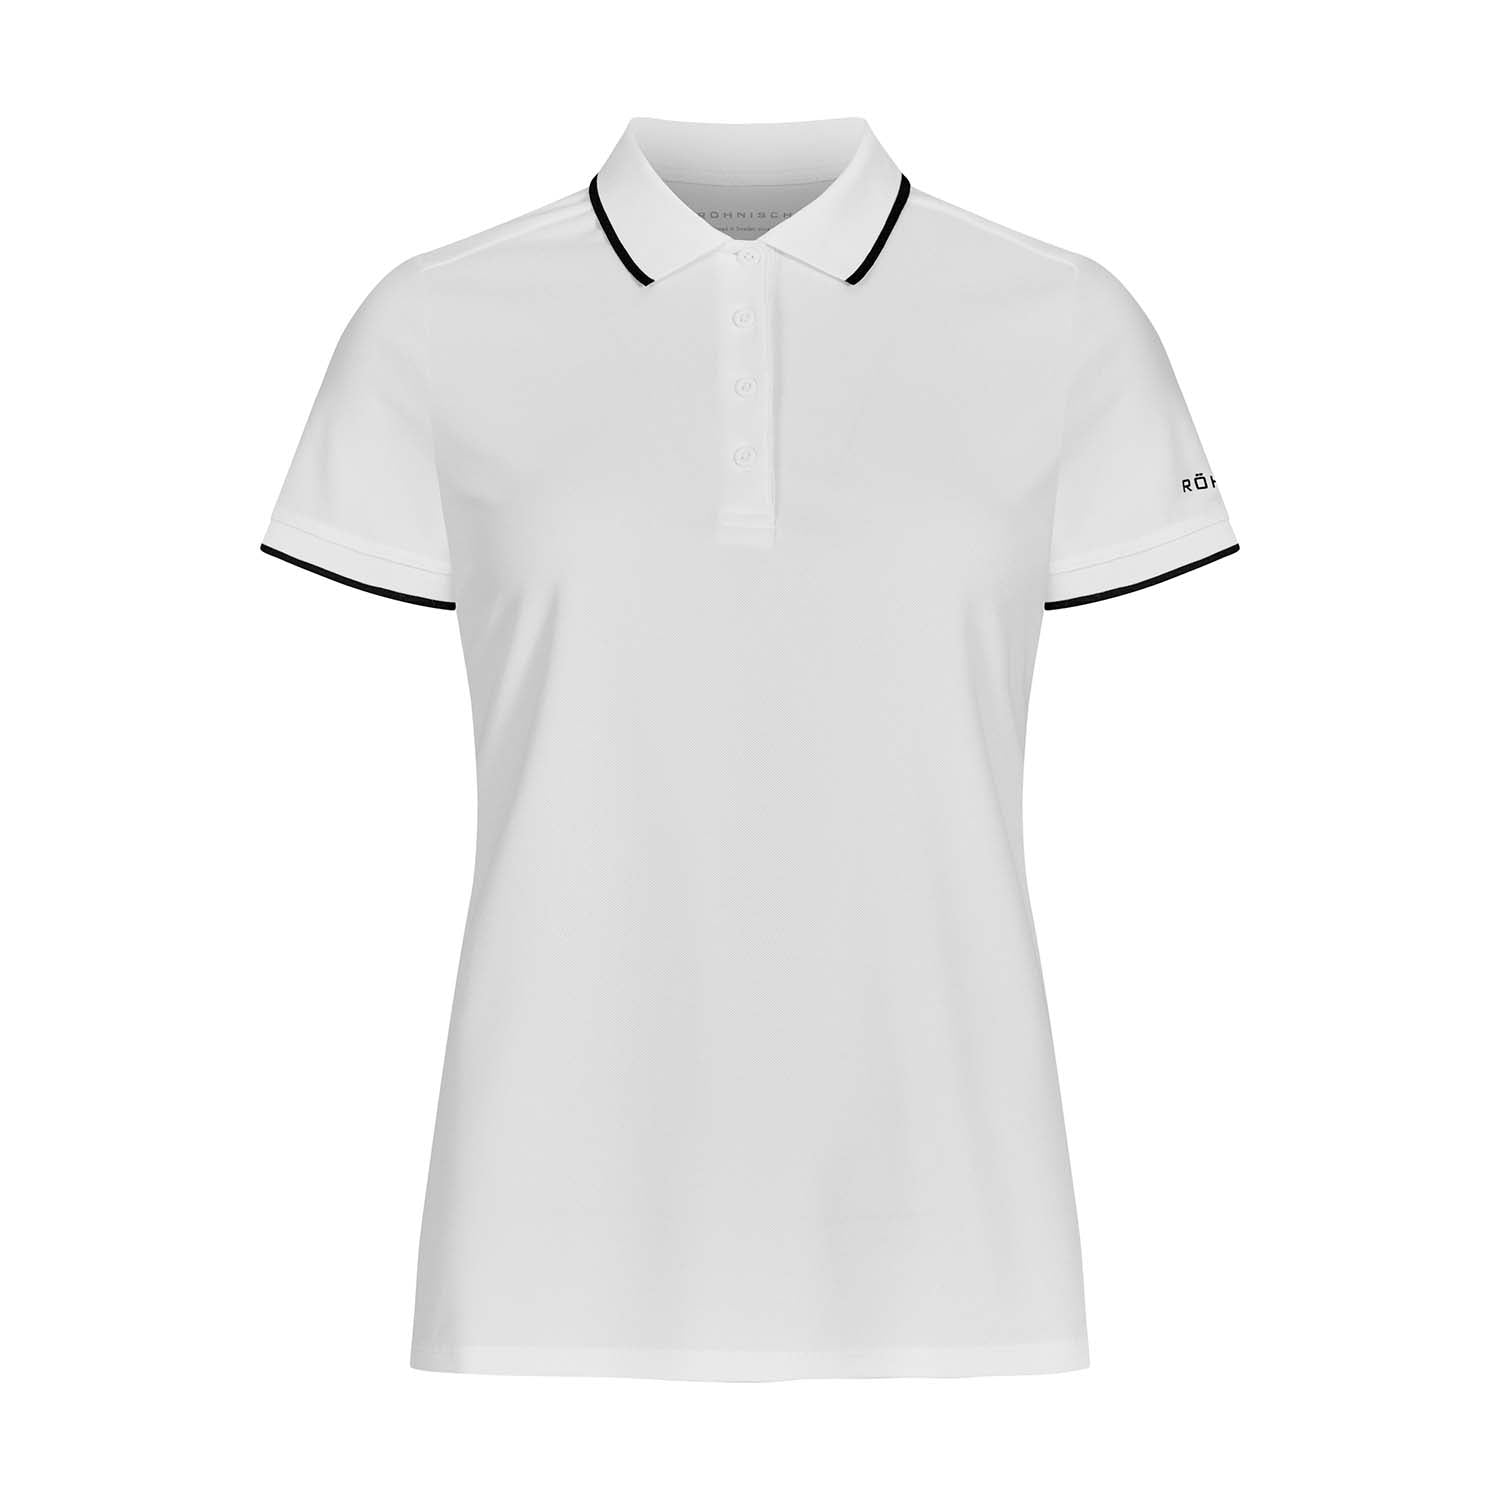 Rohnisch Classic White Polo Shirt with Contrast Trim